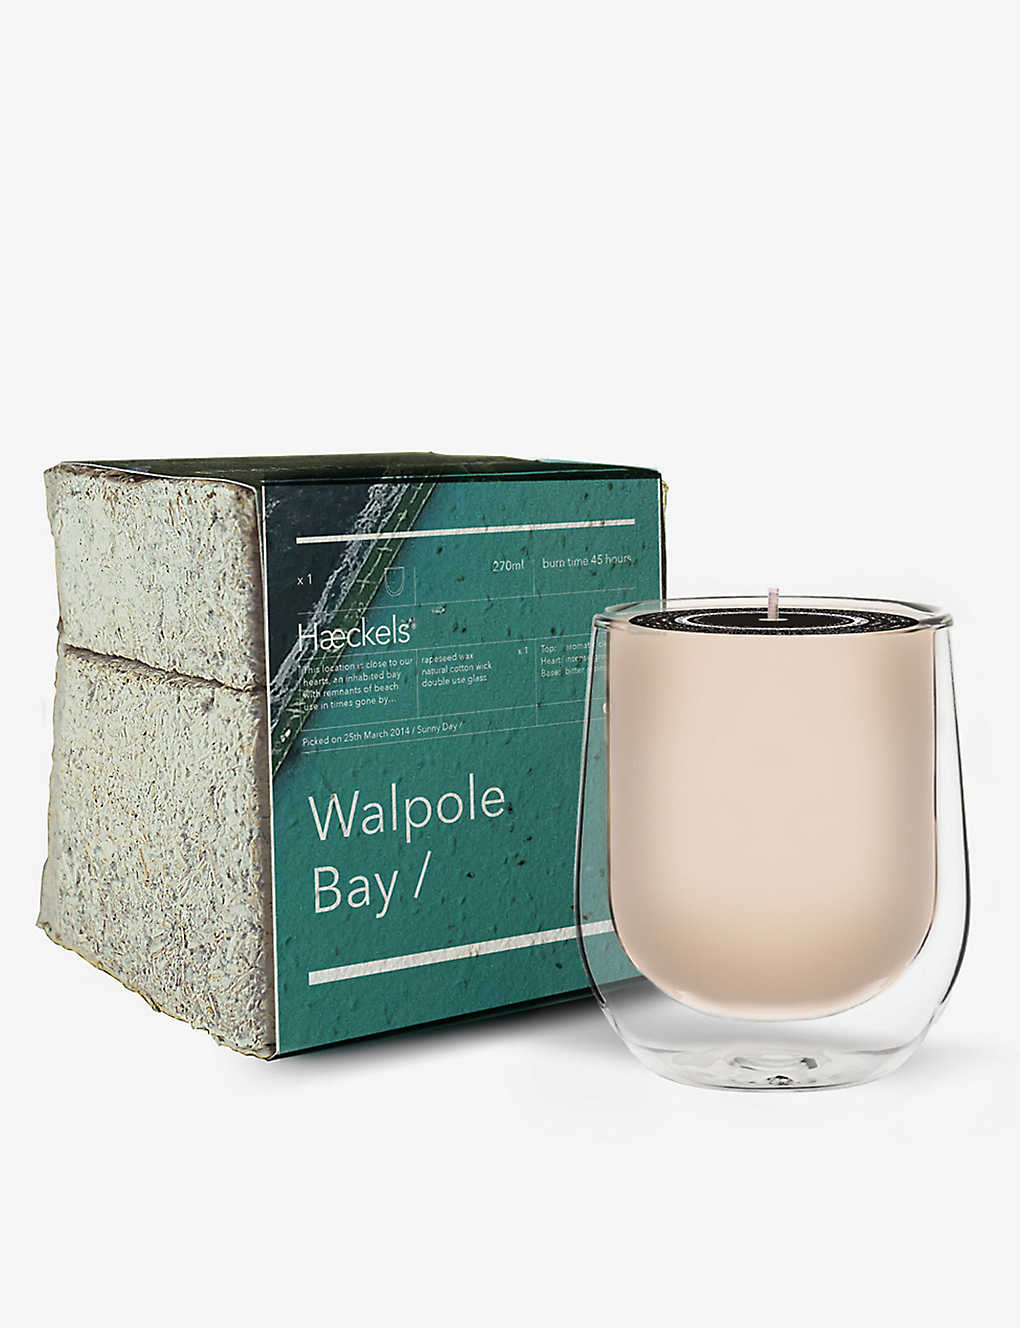 HAECKELS ワルポール ベイ キャンドル candle Walpole 270g 【2022正規激安】 全国宅配無料 Bay